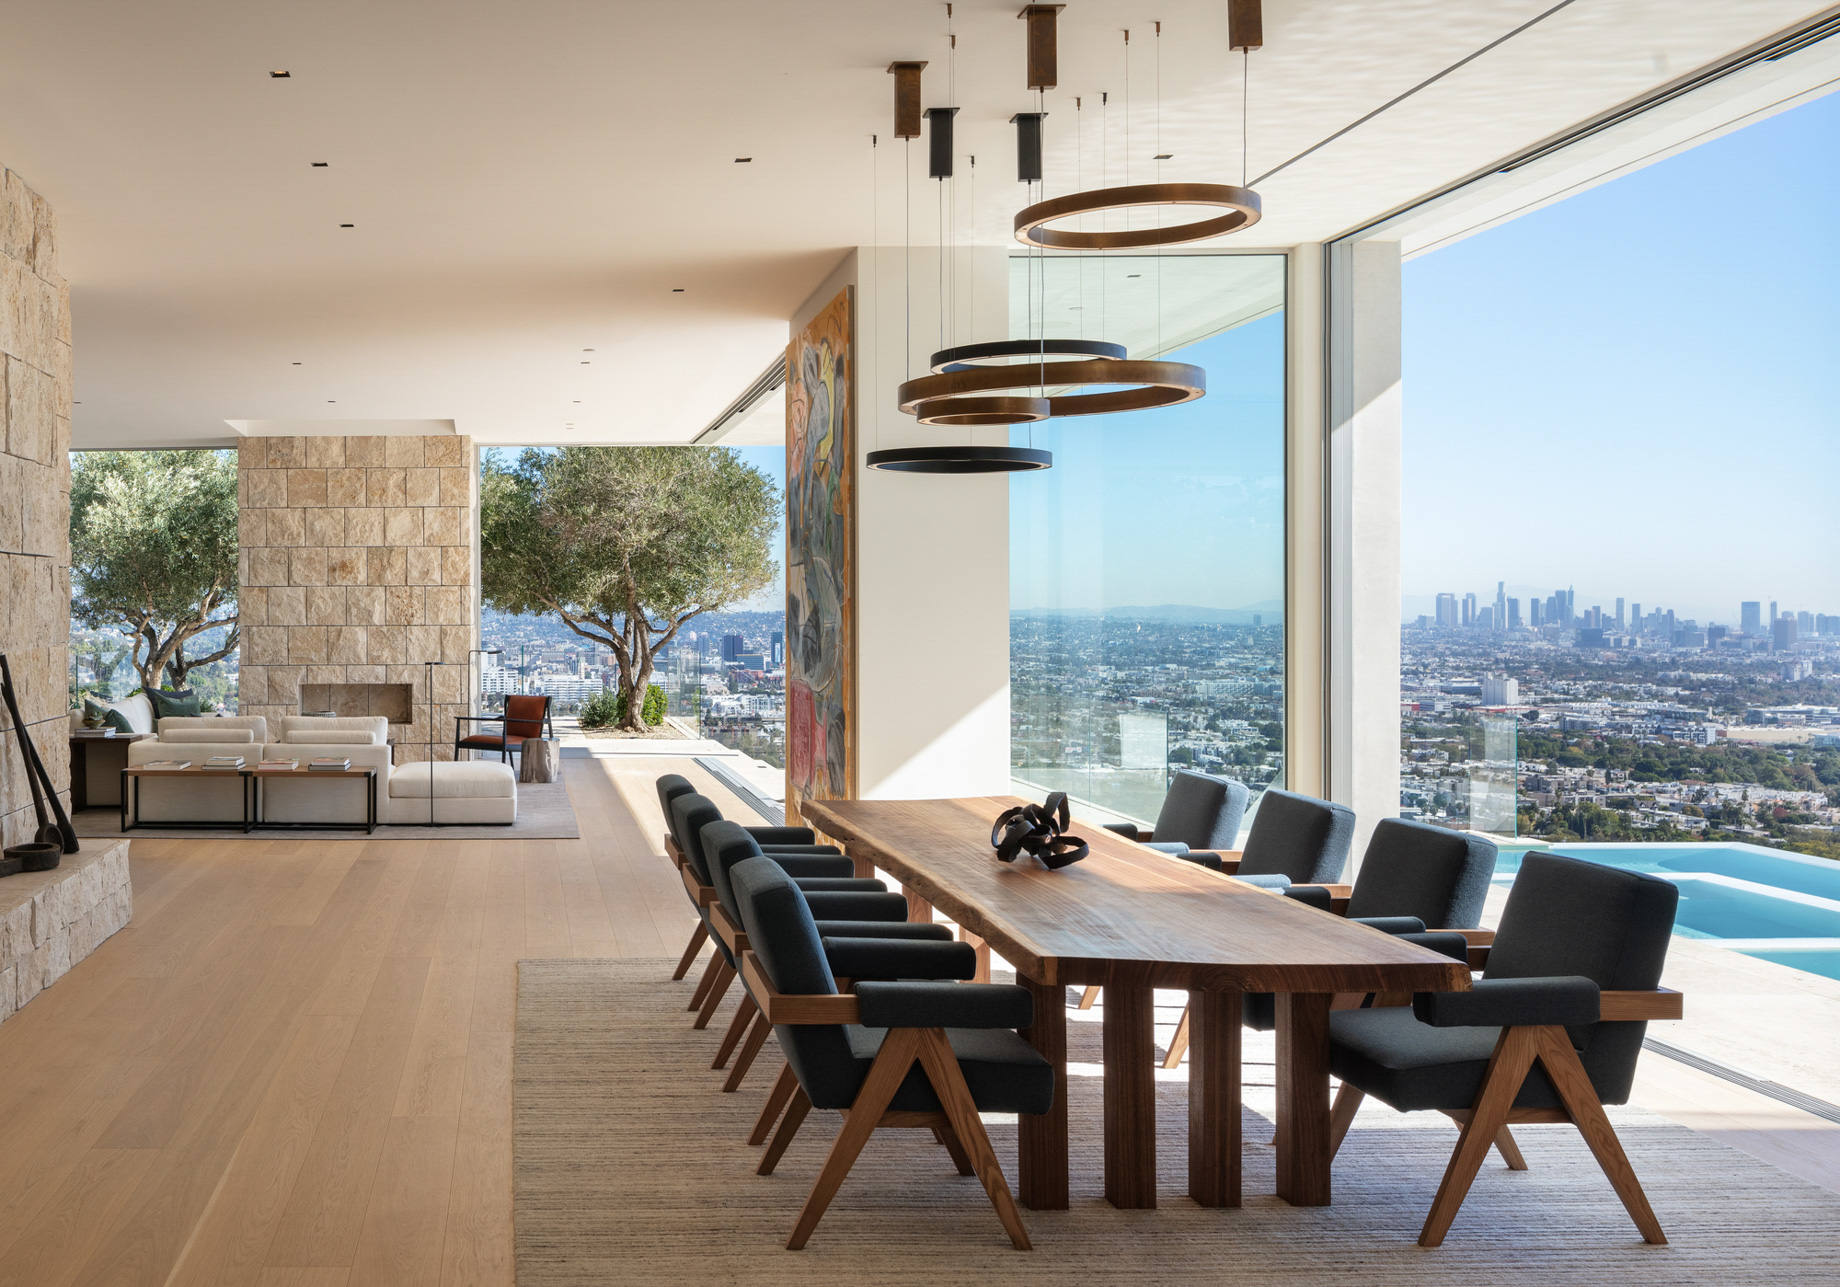 Bellgave Modern Organic Jewel Box-Like Contemporary Home – Los Angeles, CA, USA – 6